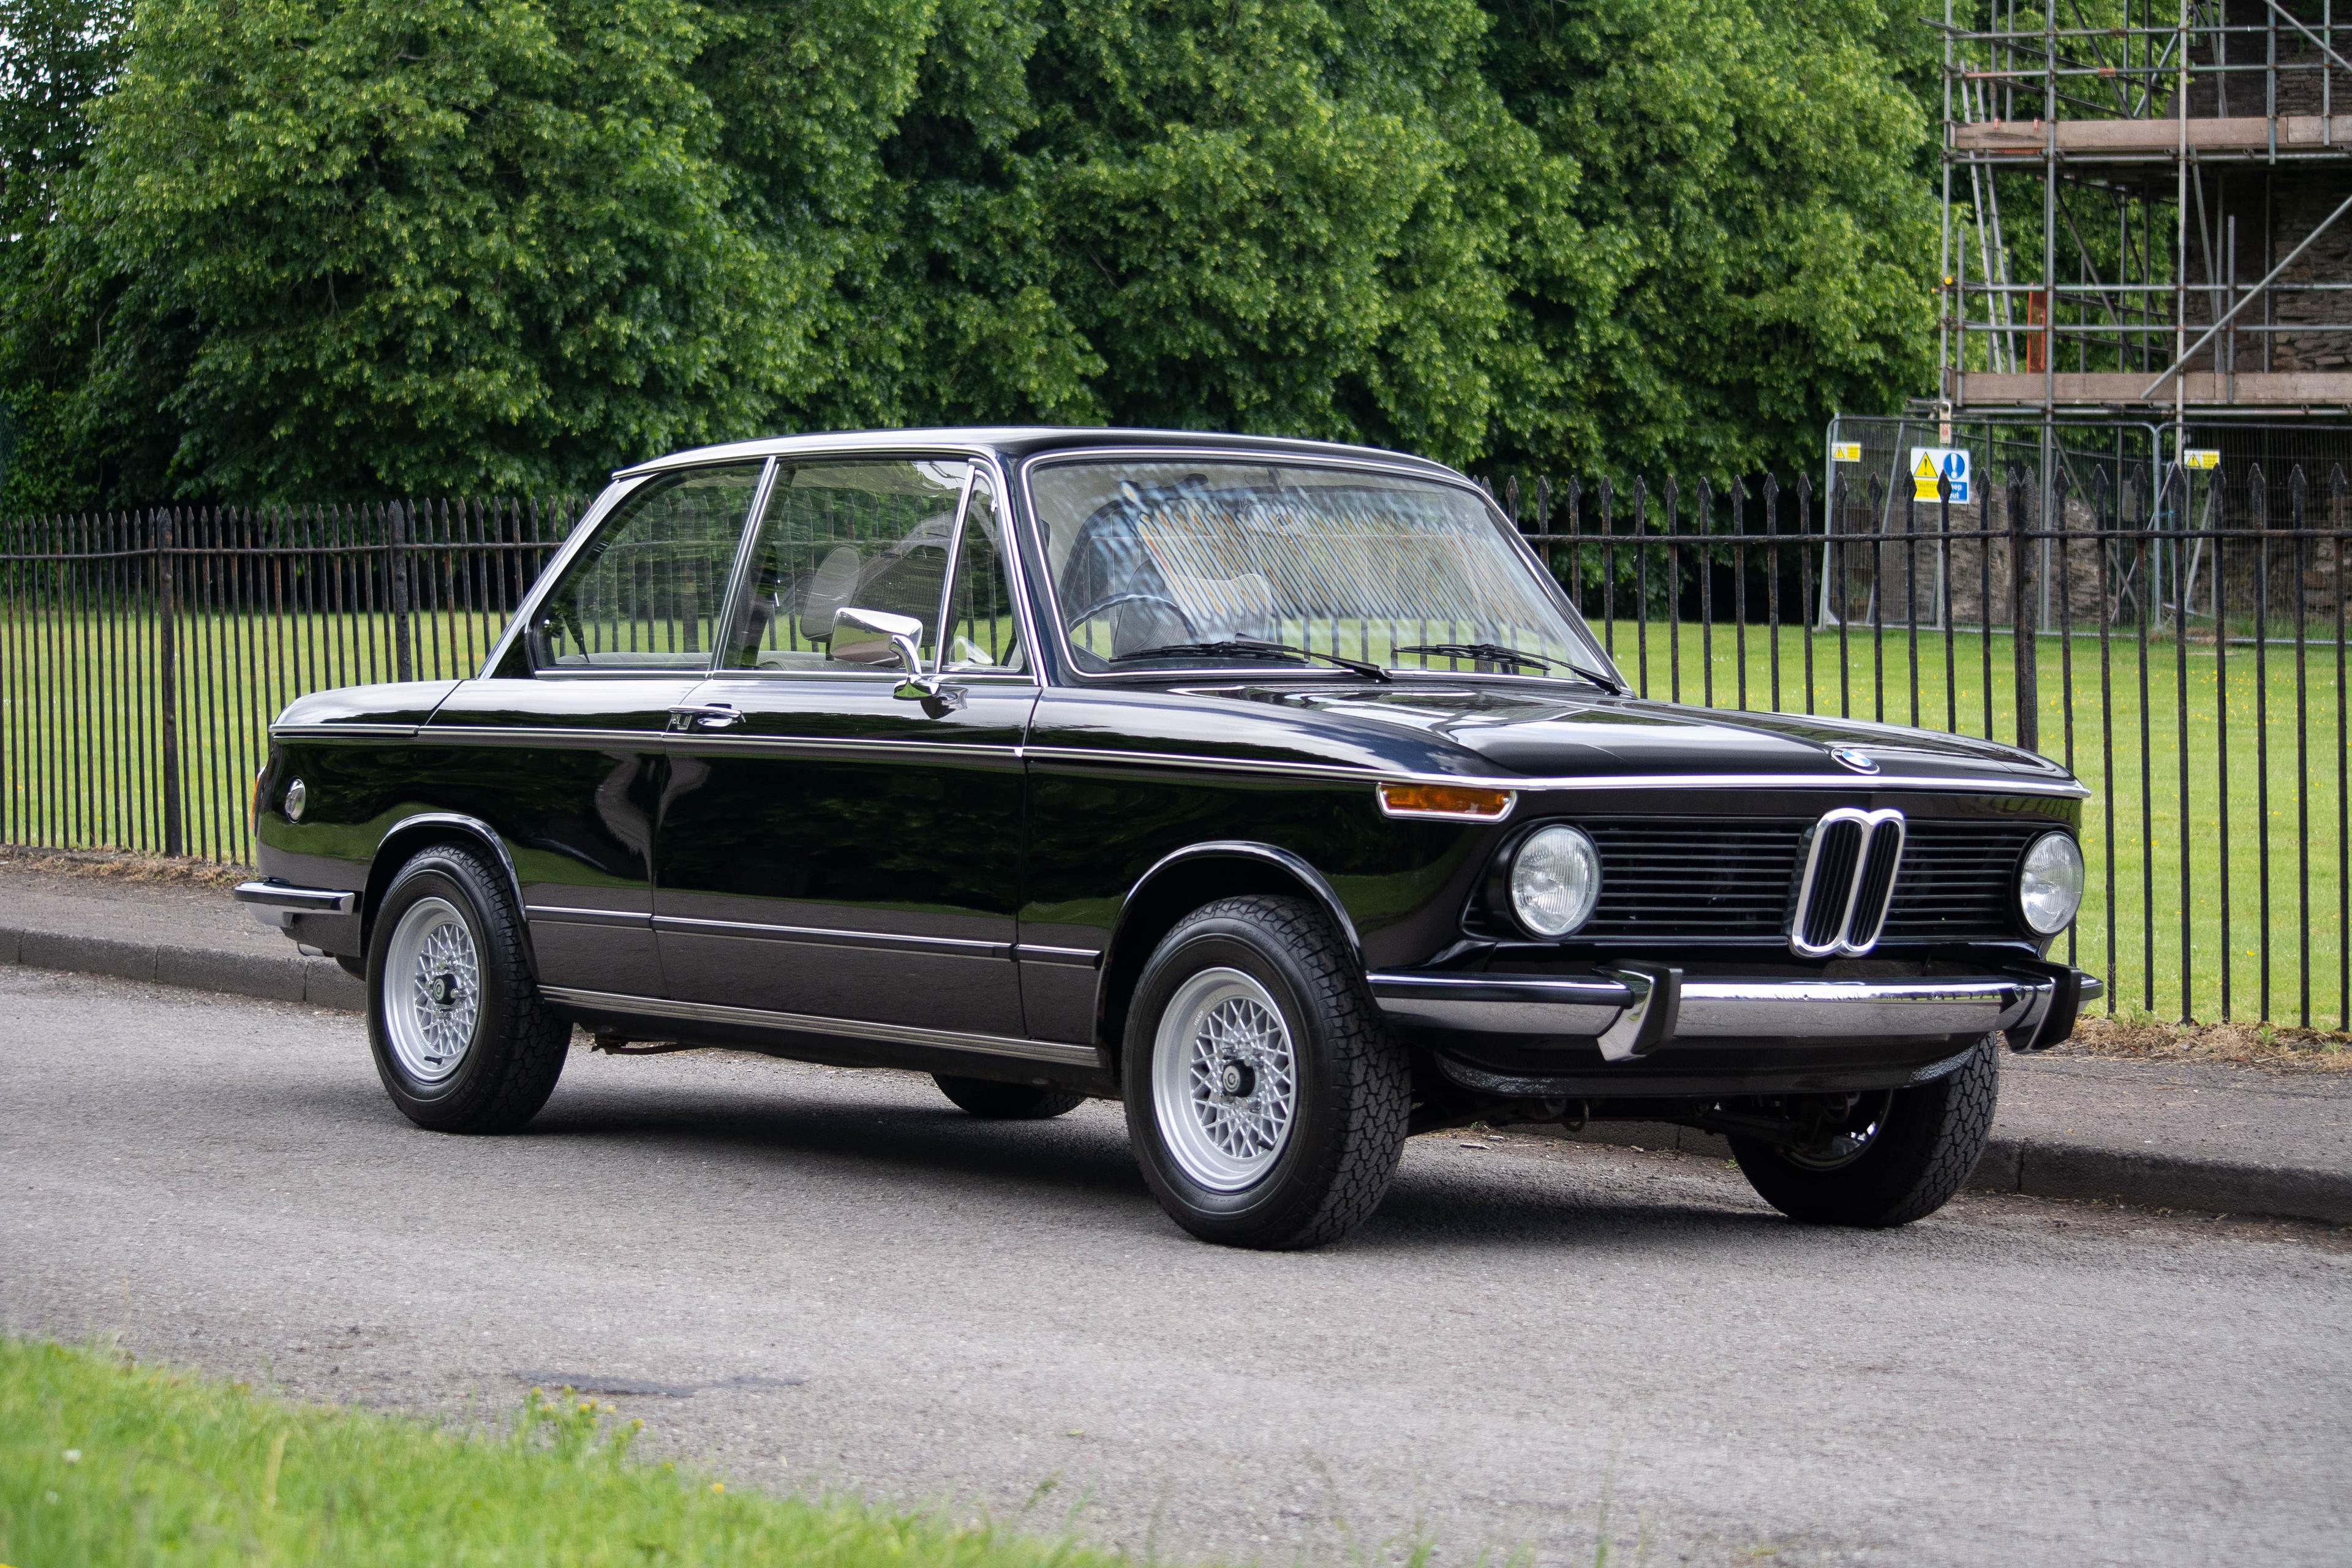 1975 BMW 1602